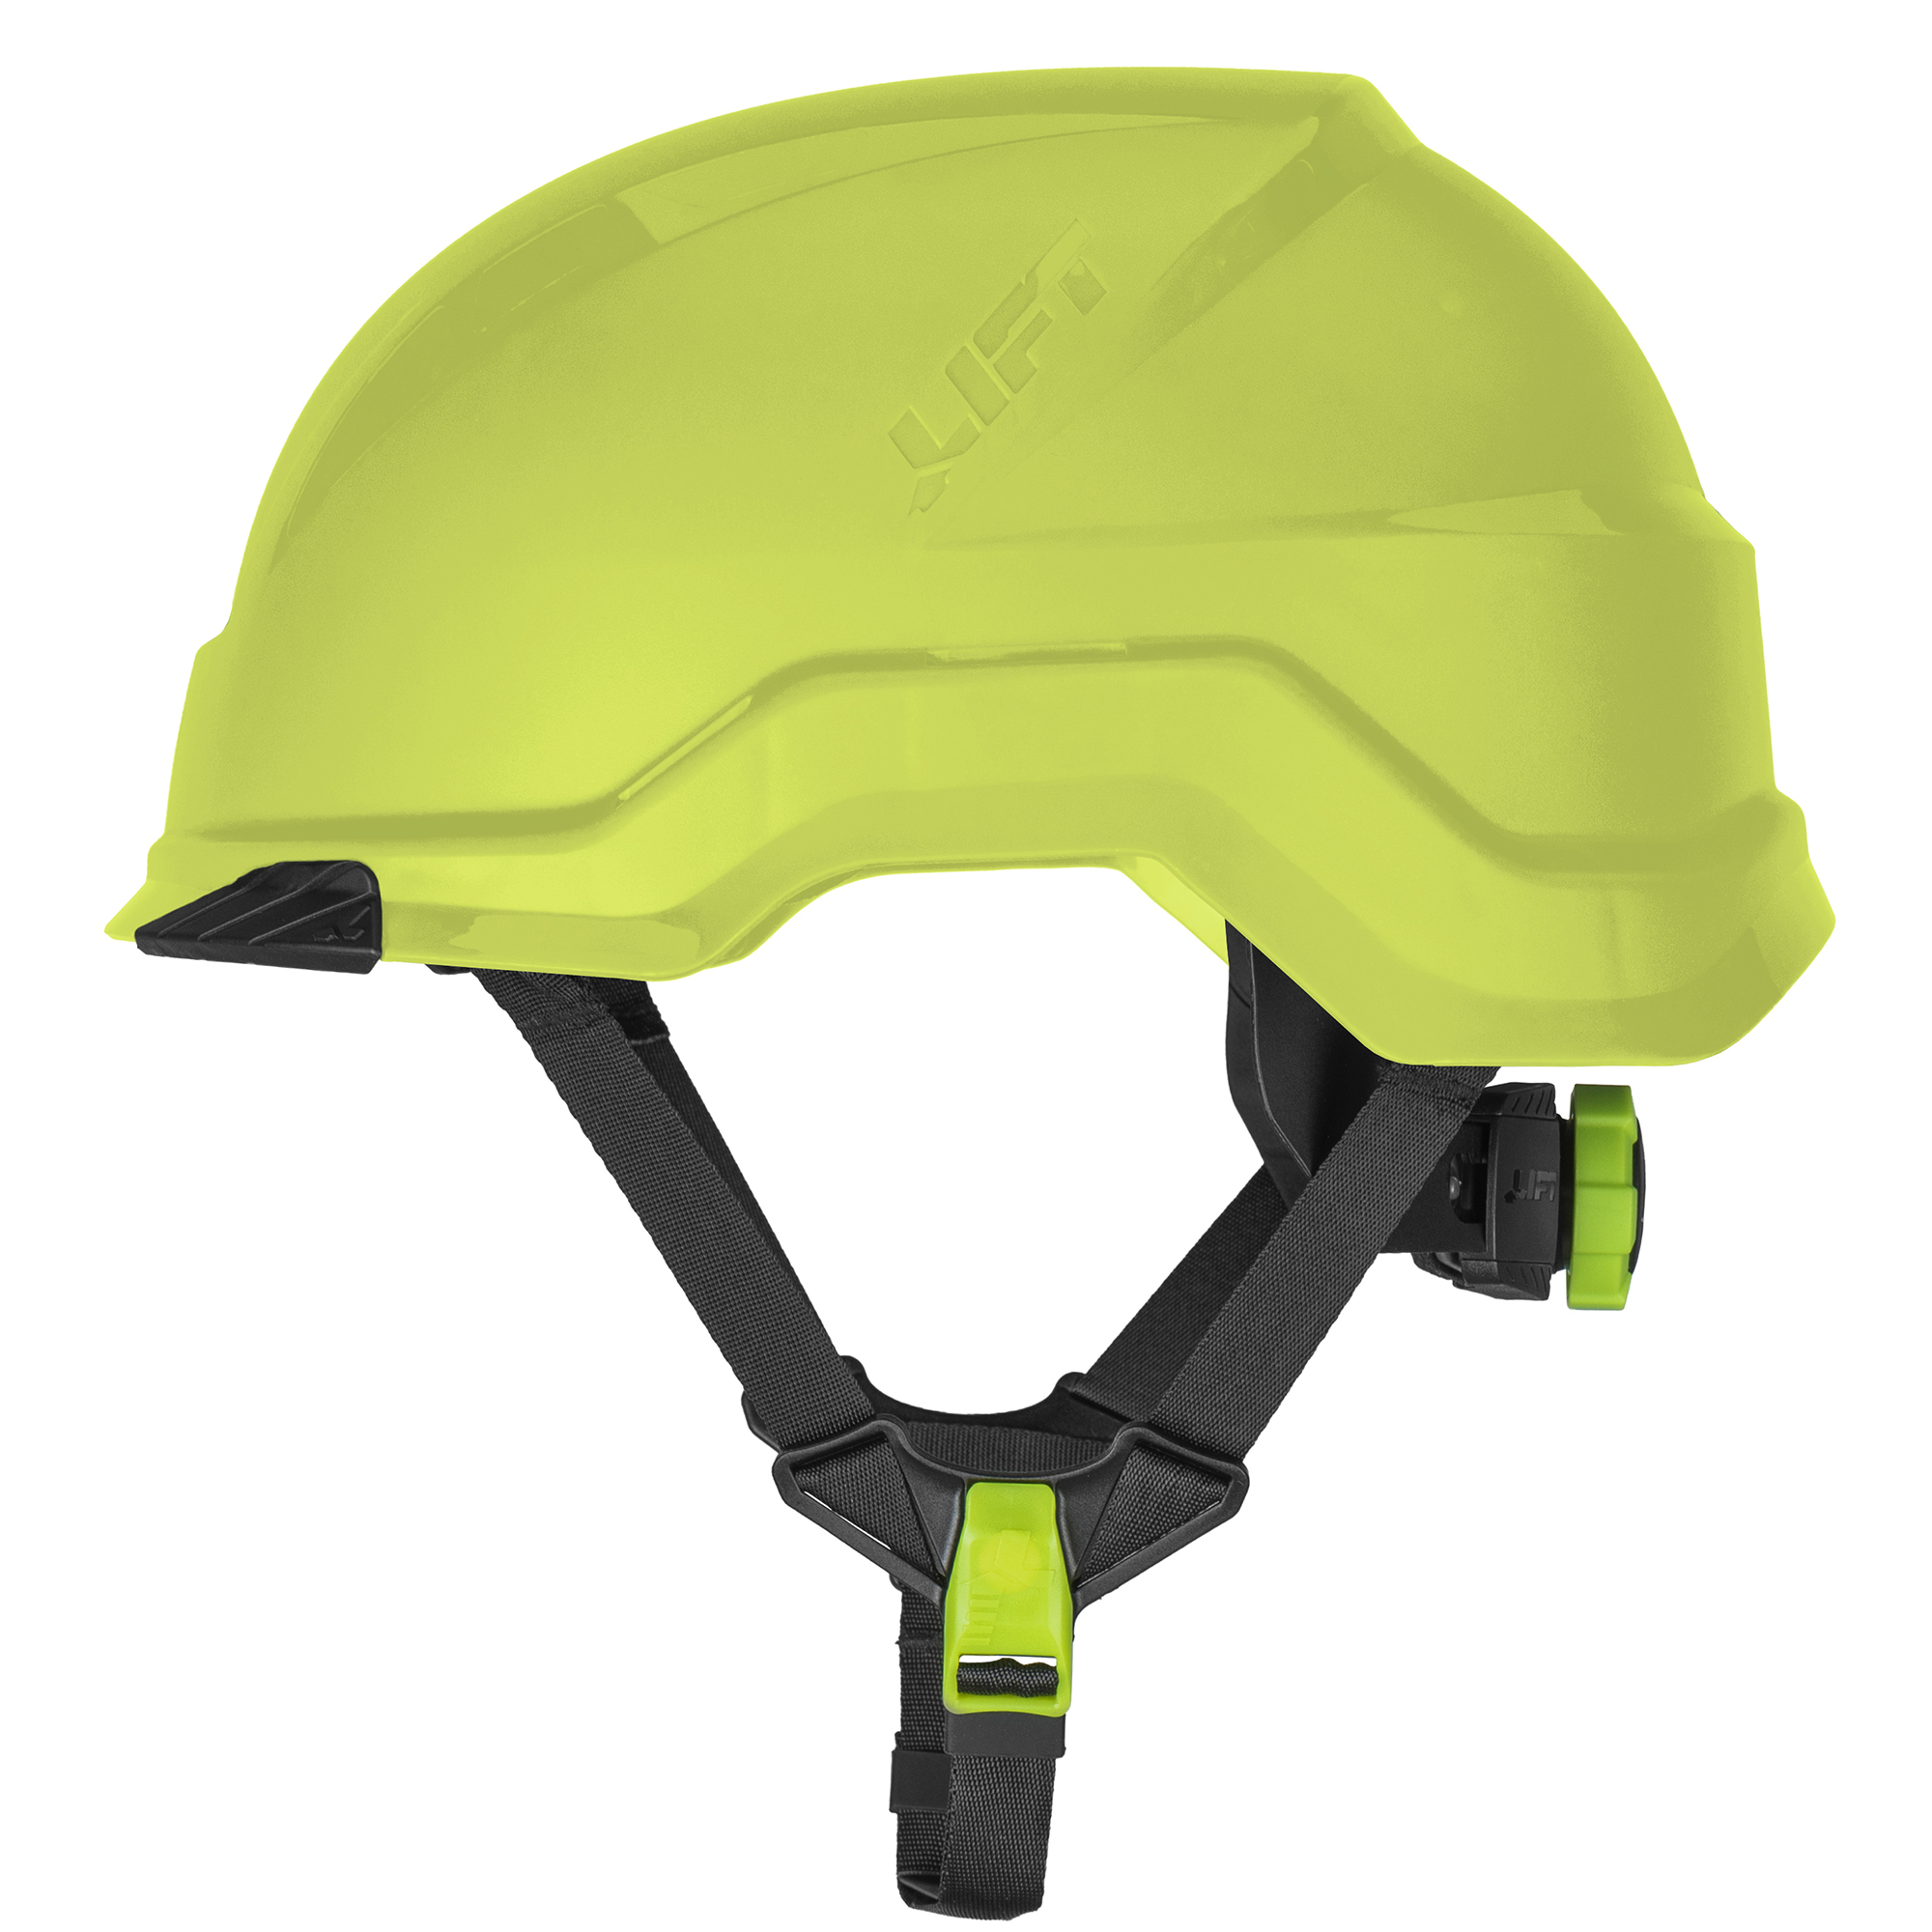 LIFT Safety, RADIX TYPE 2 NON-VENTED (Hi-Viz Yellow), Hard Hat Style Helmet, Hat Size Adjustable, Color Yellow, Model HRX-22HVE2